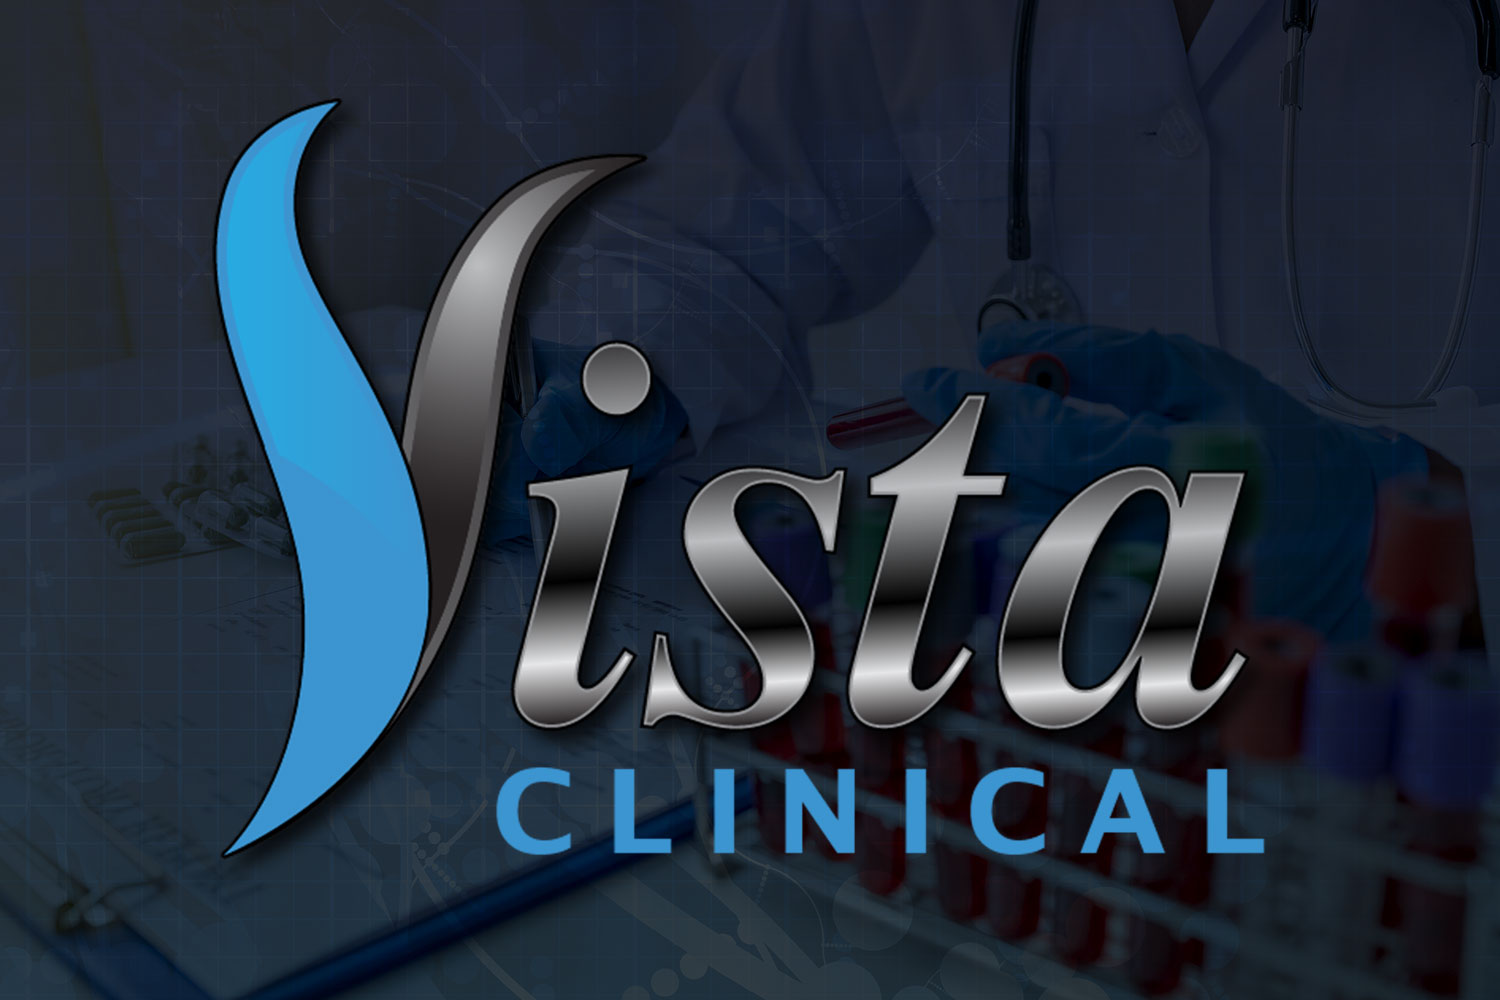 Vista Clinical - Clinical Laboratory Services Provider